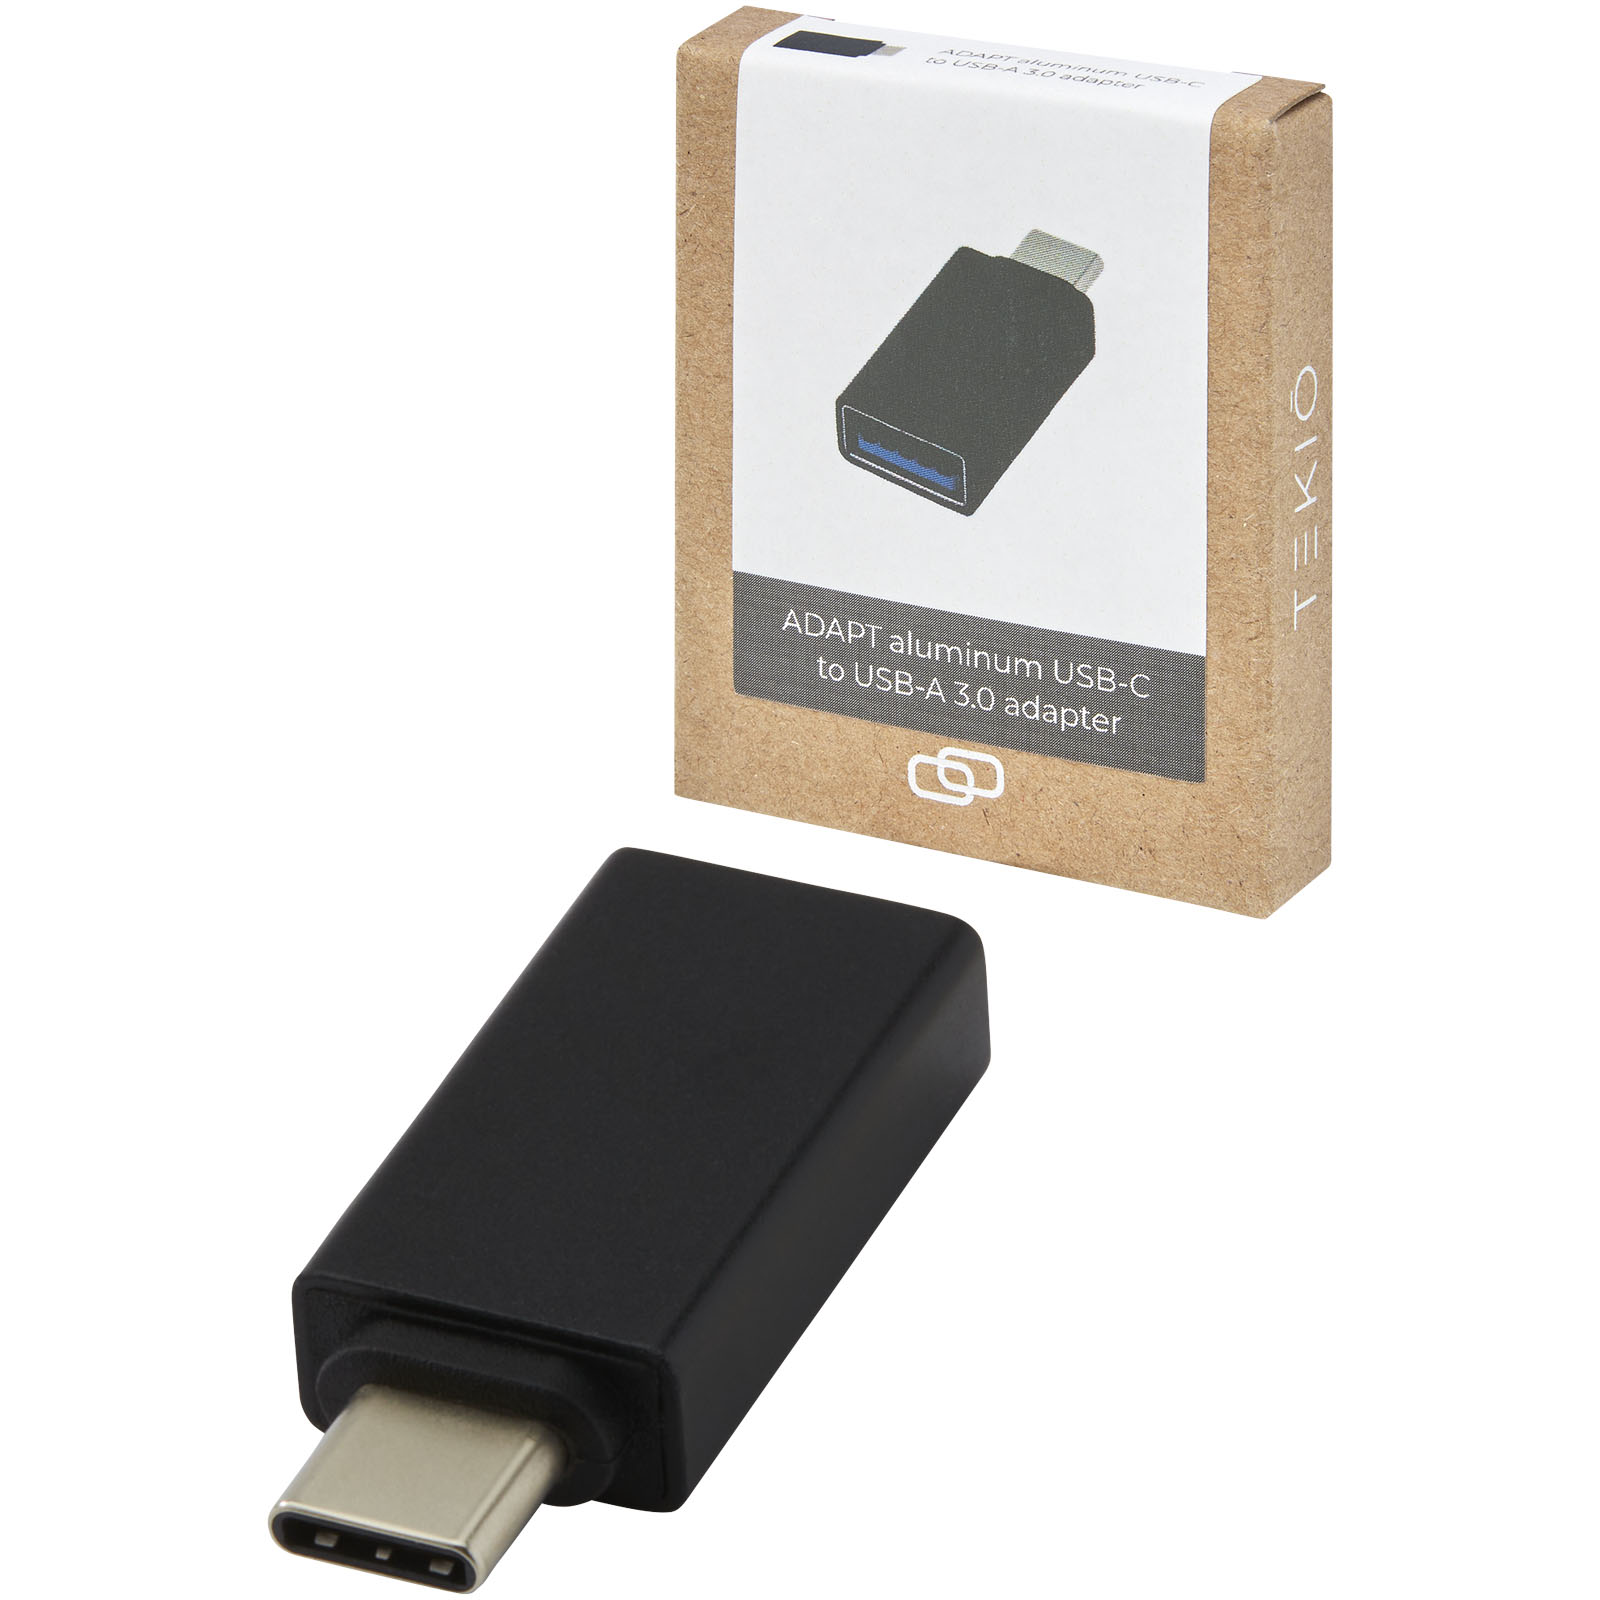 Advertising Computer Accessories - ADAPT aluminum USB-C to USB-A 3.0 adapter - 4